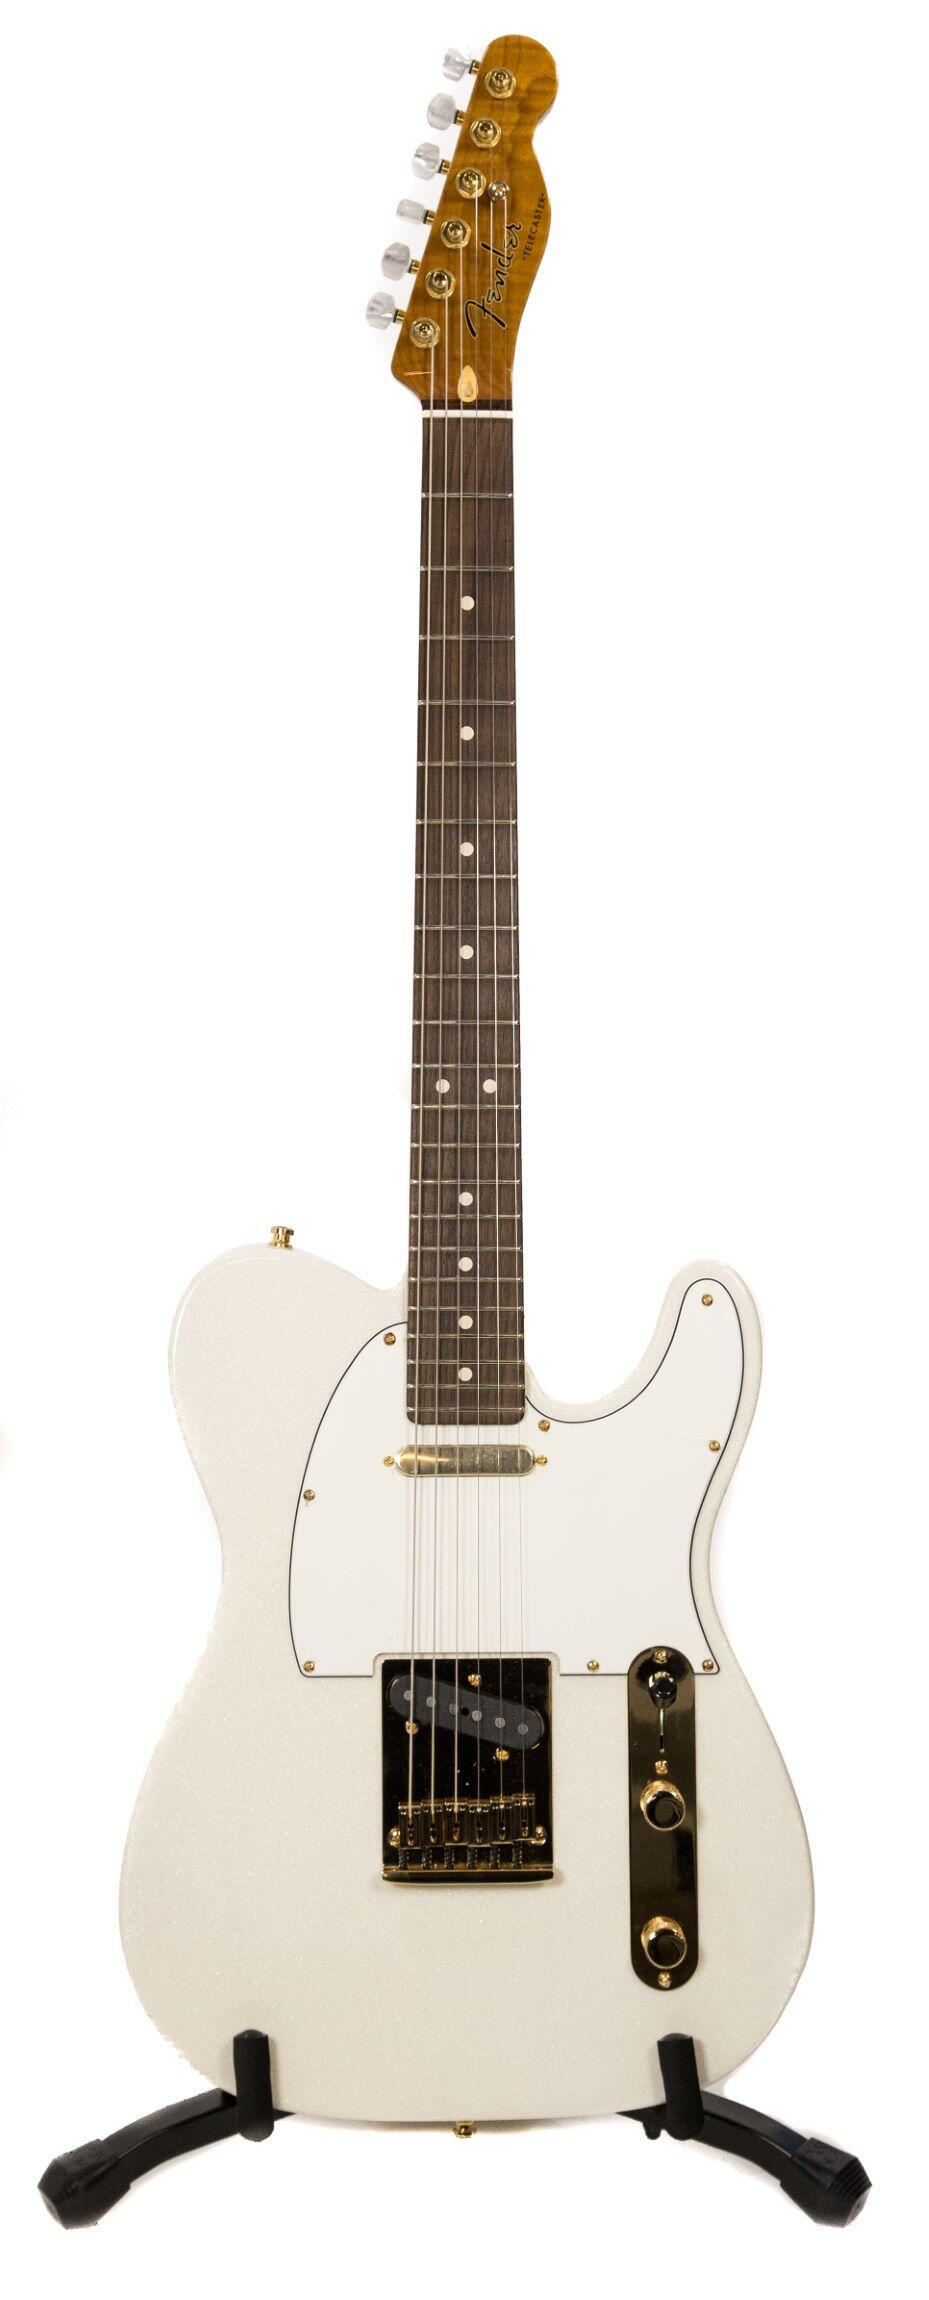 Fender Custom Shop Limited Edition Super Custom Deluxe Telecaster - White Sparkle : photo 1